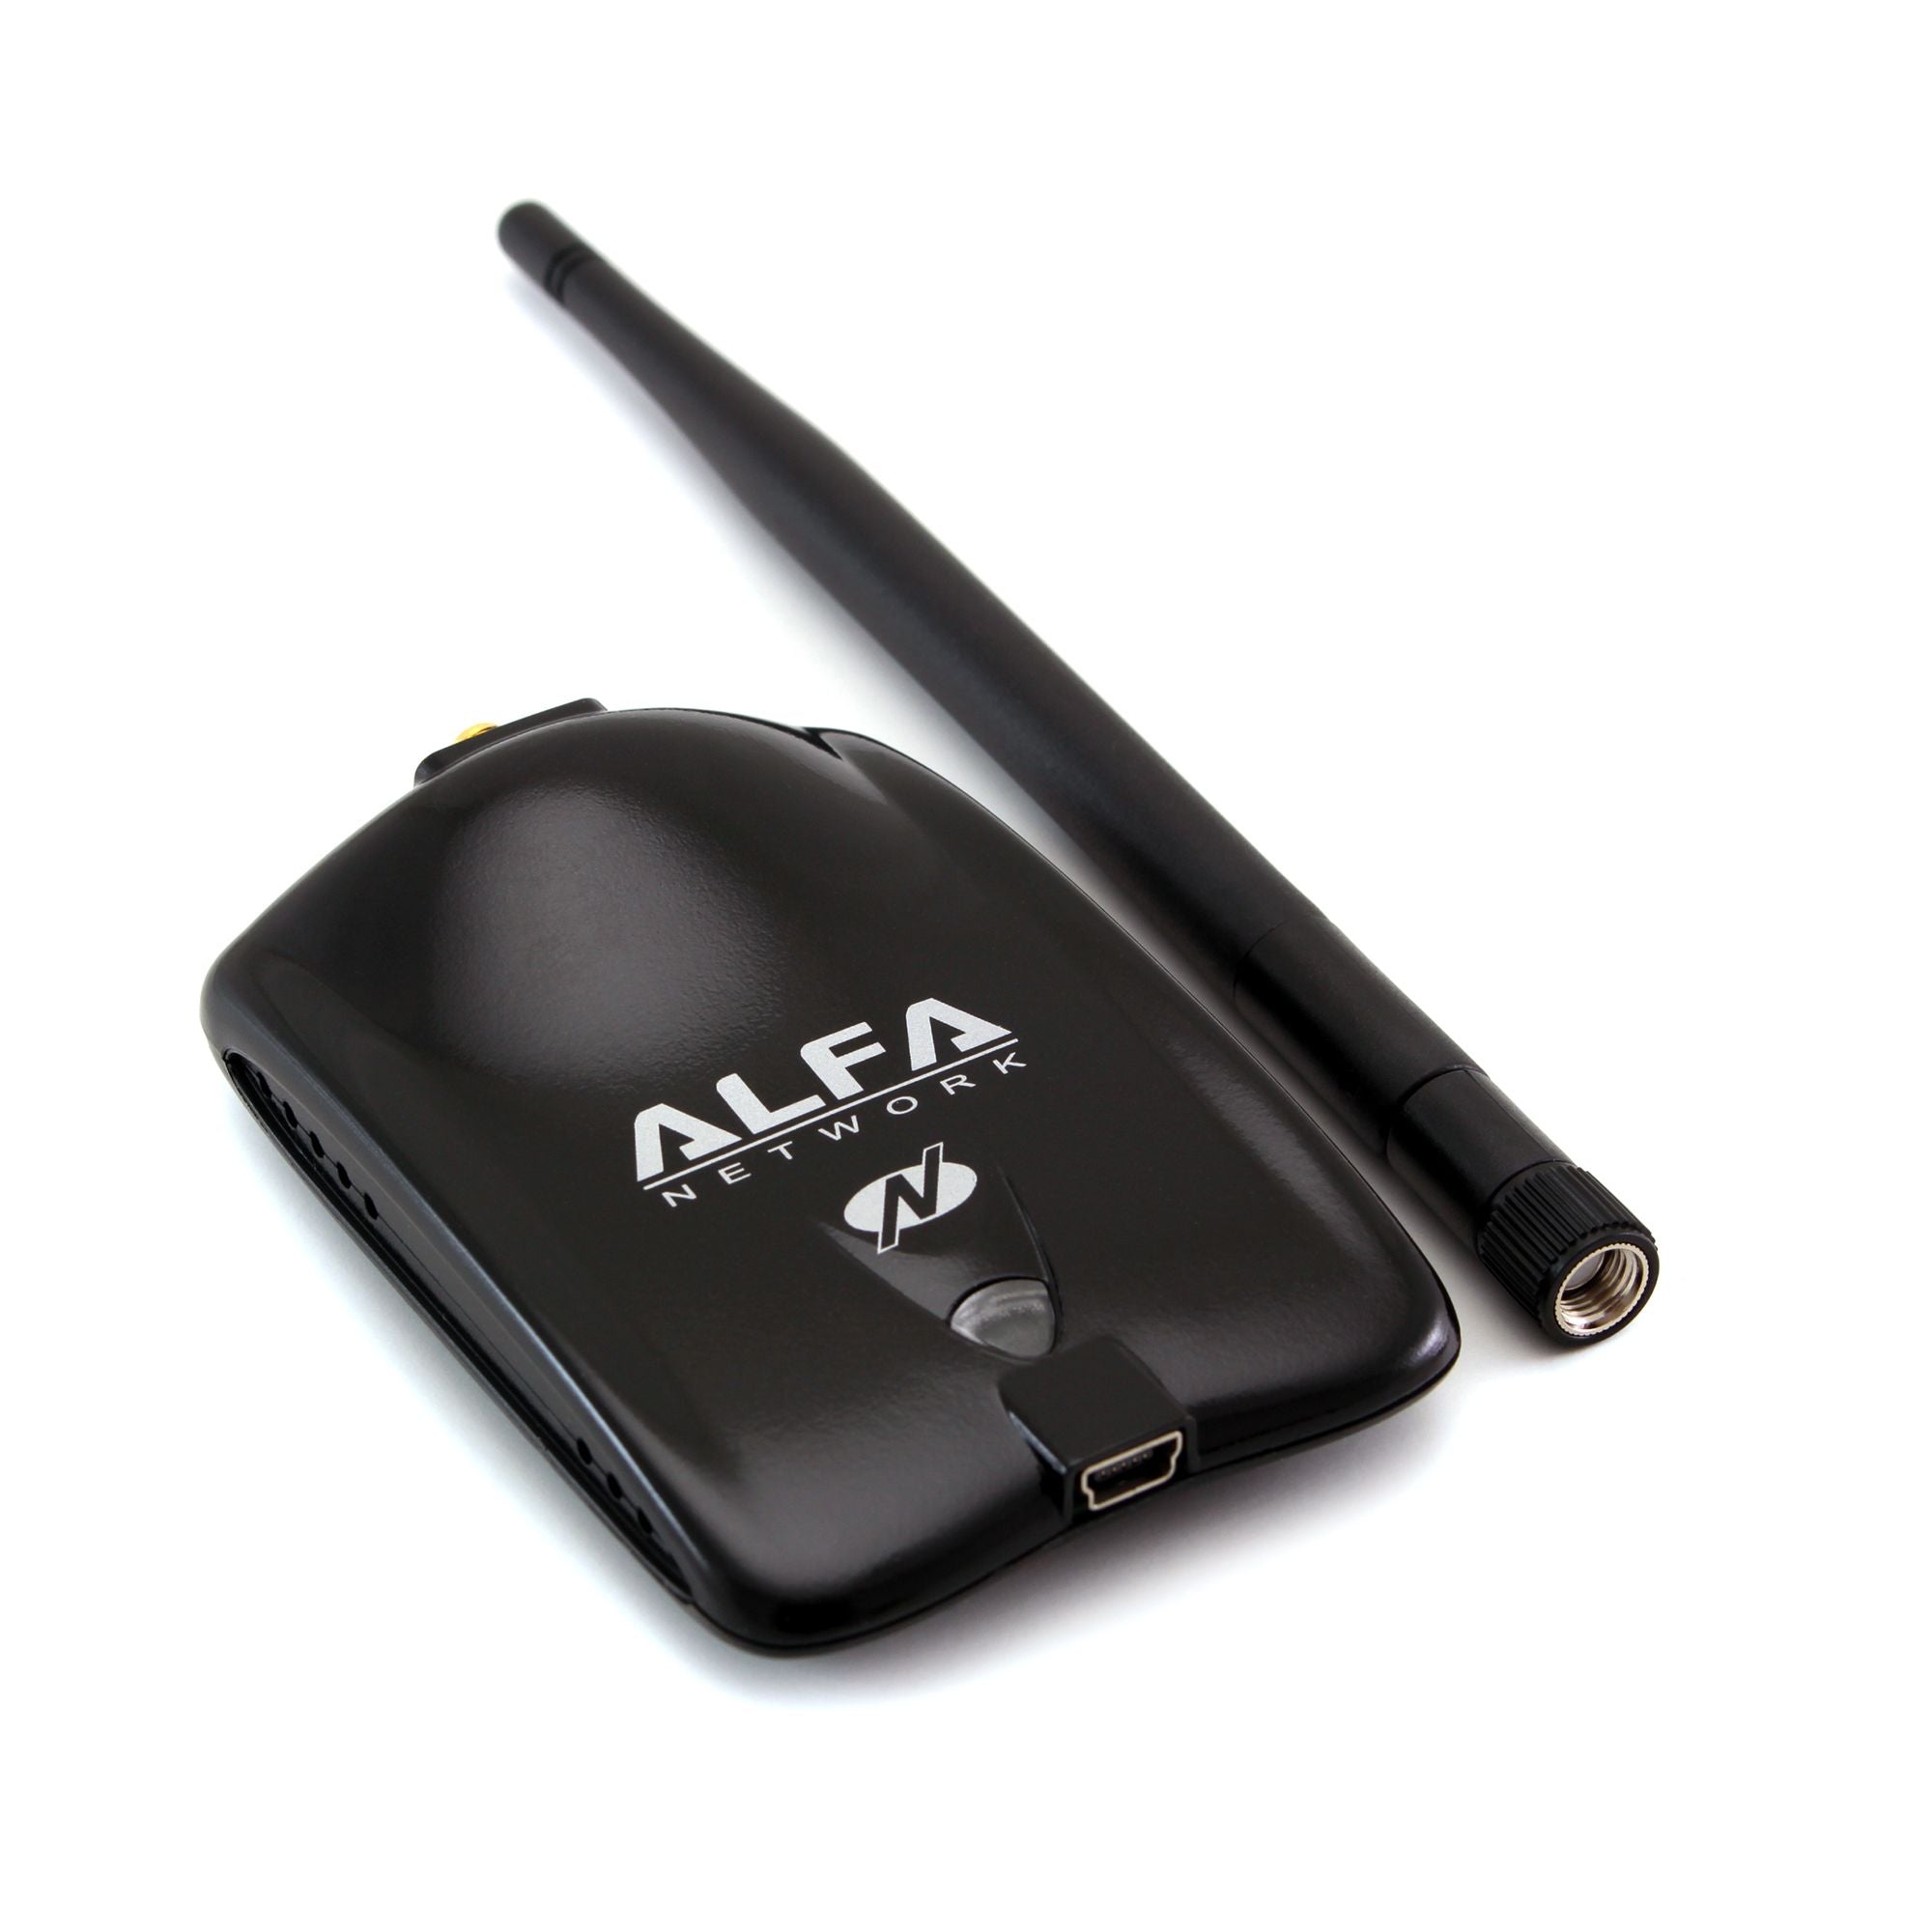 Alfa AWUS036NHA Wi-Fi Adapter - Sapsan Sklep